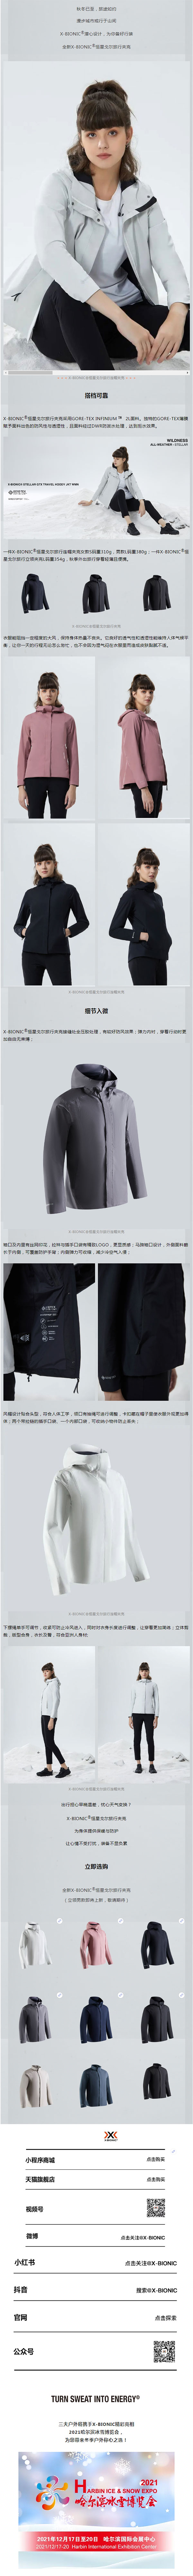 X-BIONIC推出秋冬新品 GORE-TEX®恒星戈尔旅行夹克(图2)